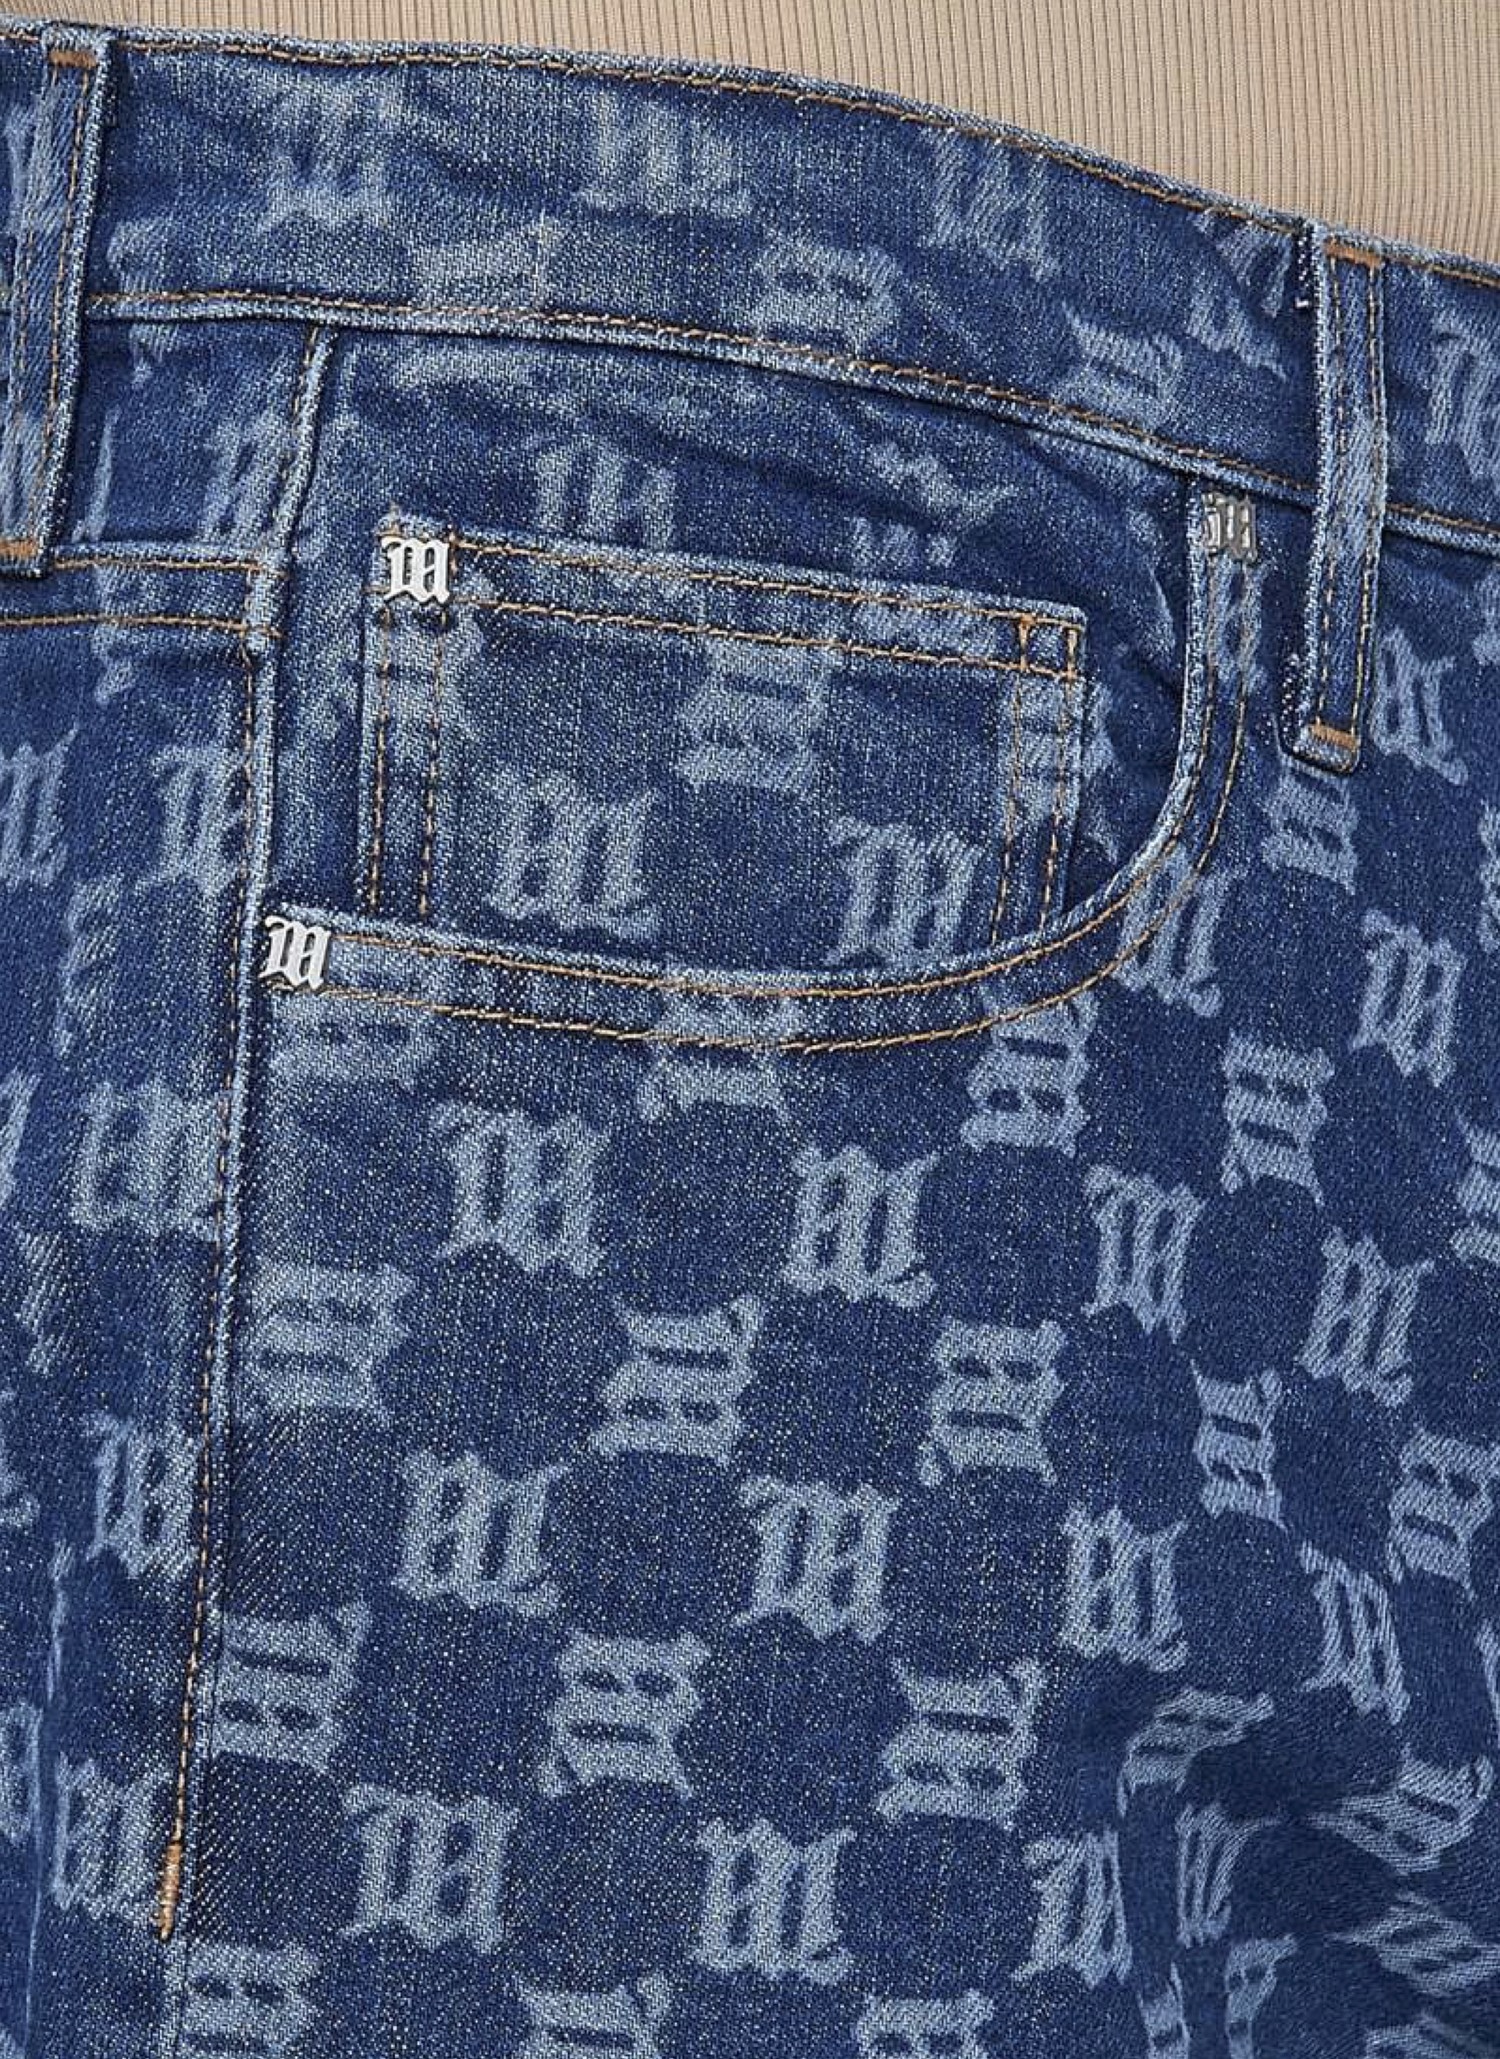 Blue Jeans with monogram MISBHV - Vitkac TW